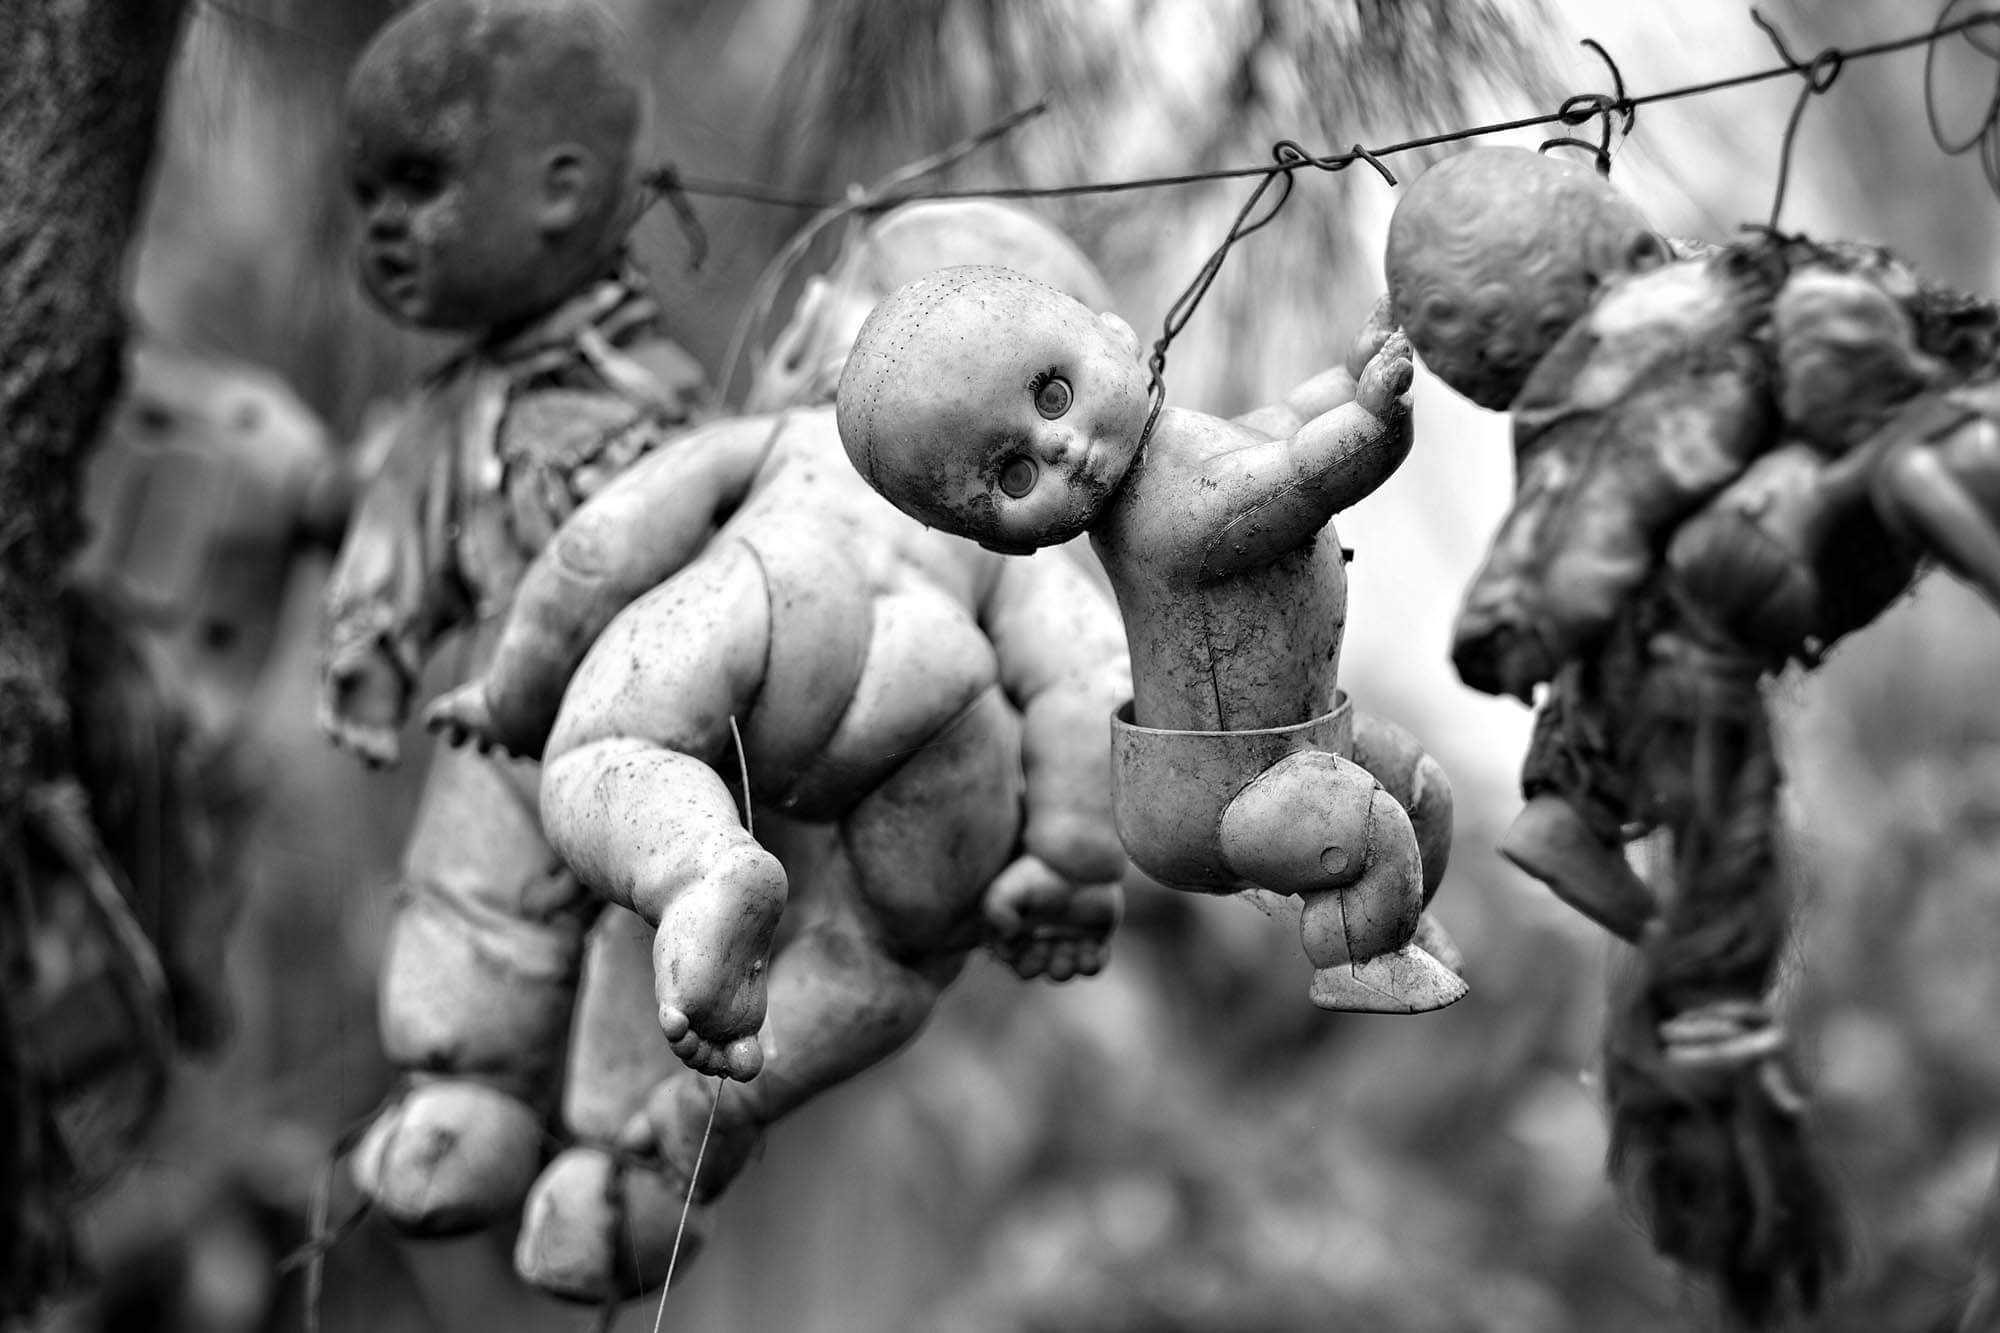 La Isla de las Muñecas (Island of Dolls) from the Death in Mexico series - By David Brommer